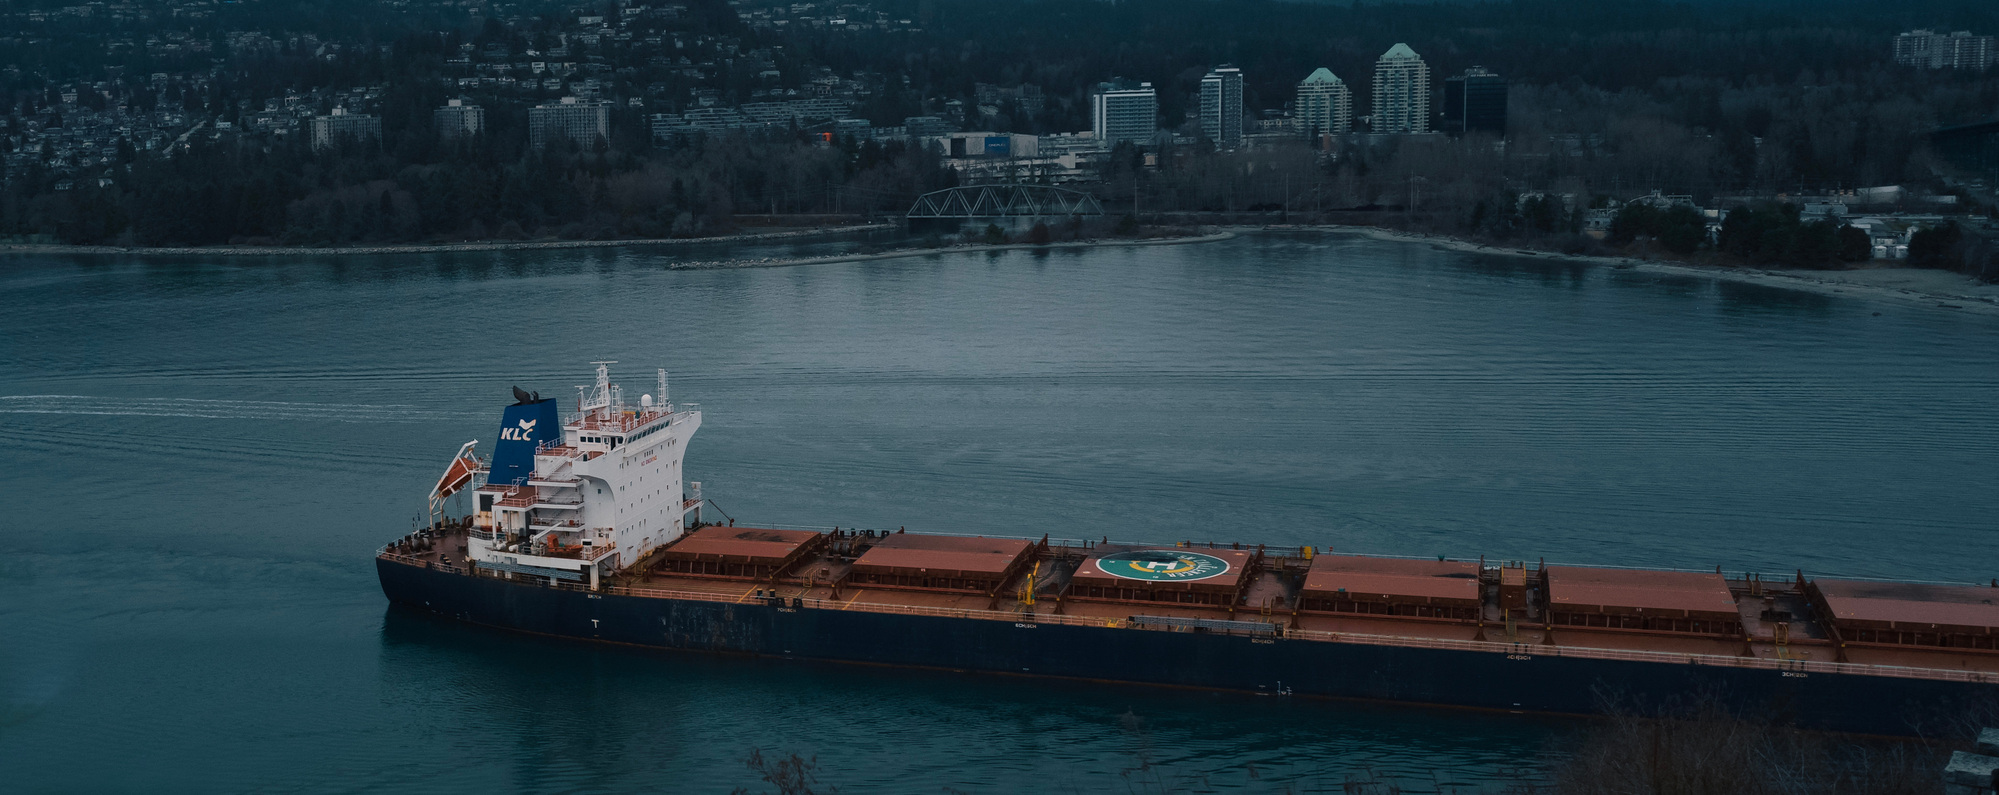 Cargo Ship.
Vancouver Harbour, 2023 Mar.